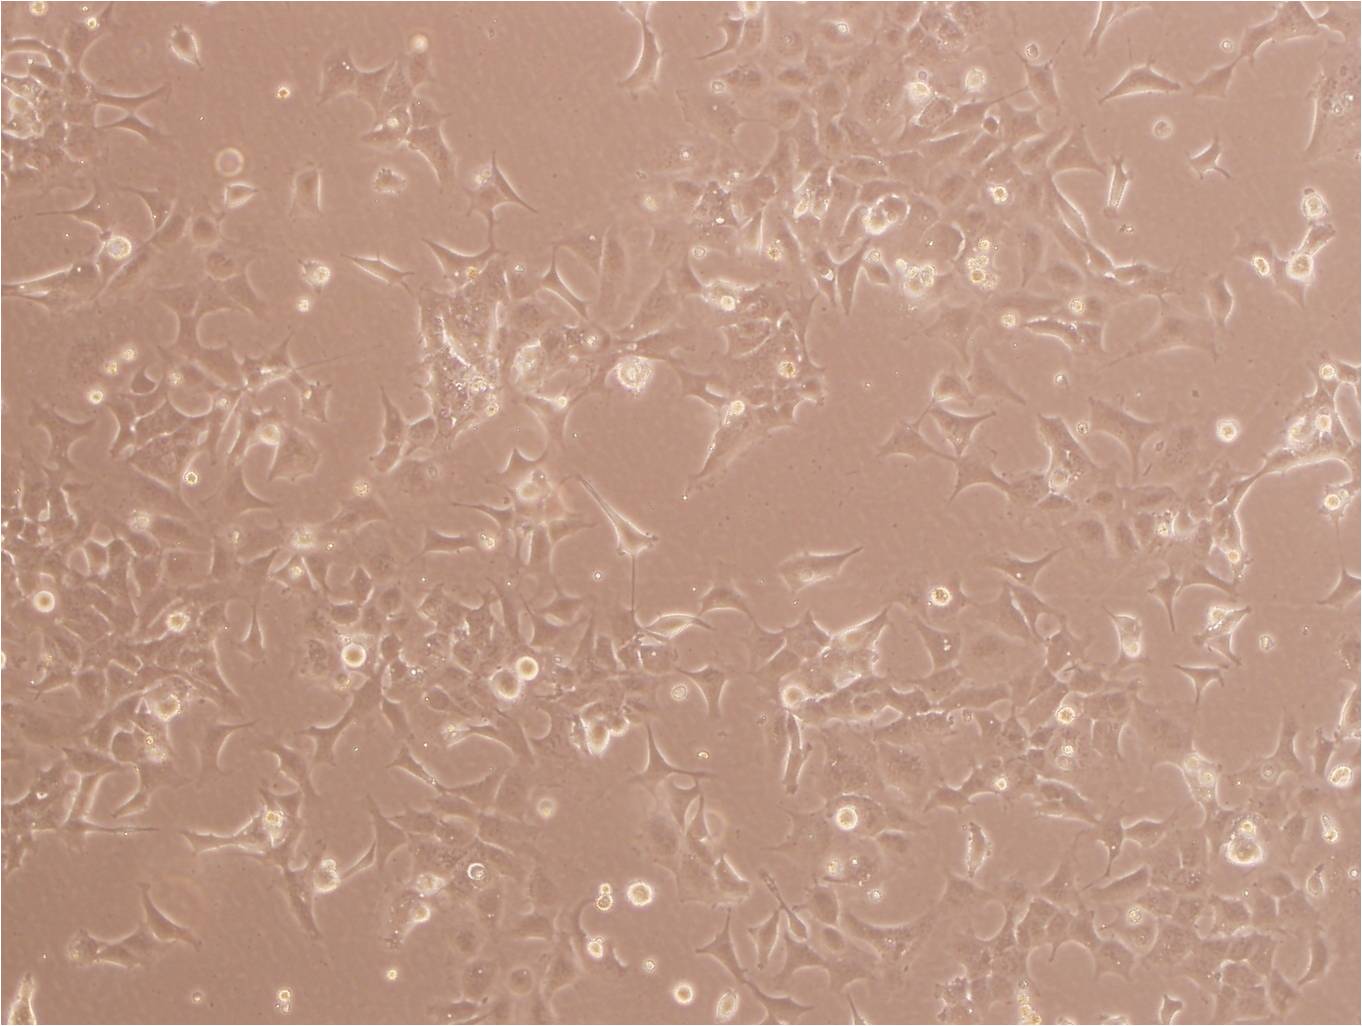 NCI-H2052 Cell:人恶性胸膜间皮瘤细胞系